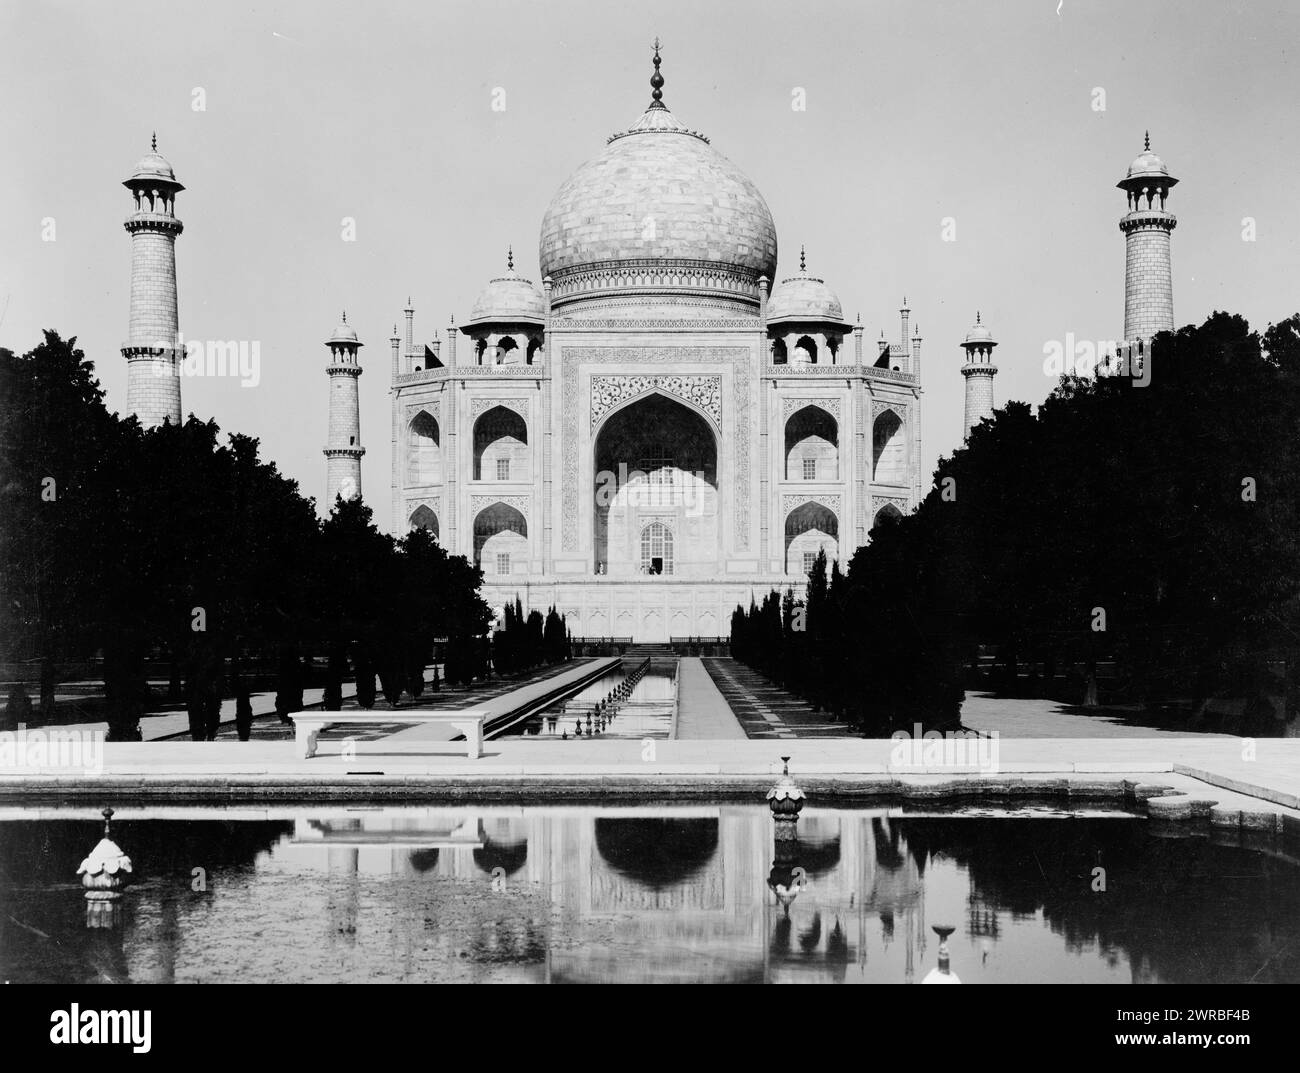 Taj Mahal, Photo shows an exterior view of the Taj Mahal from beyond reflecting pools., Carpenter, Frank G. (Frank George), 1855-1924, collector, ca. 1920, Taj Mahal (Agra, India), Photographic prints, 1920., Photographic prints, 1920, 1 photographic print Stock Photo